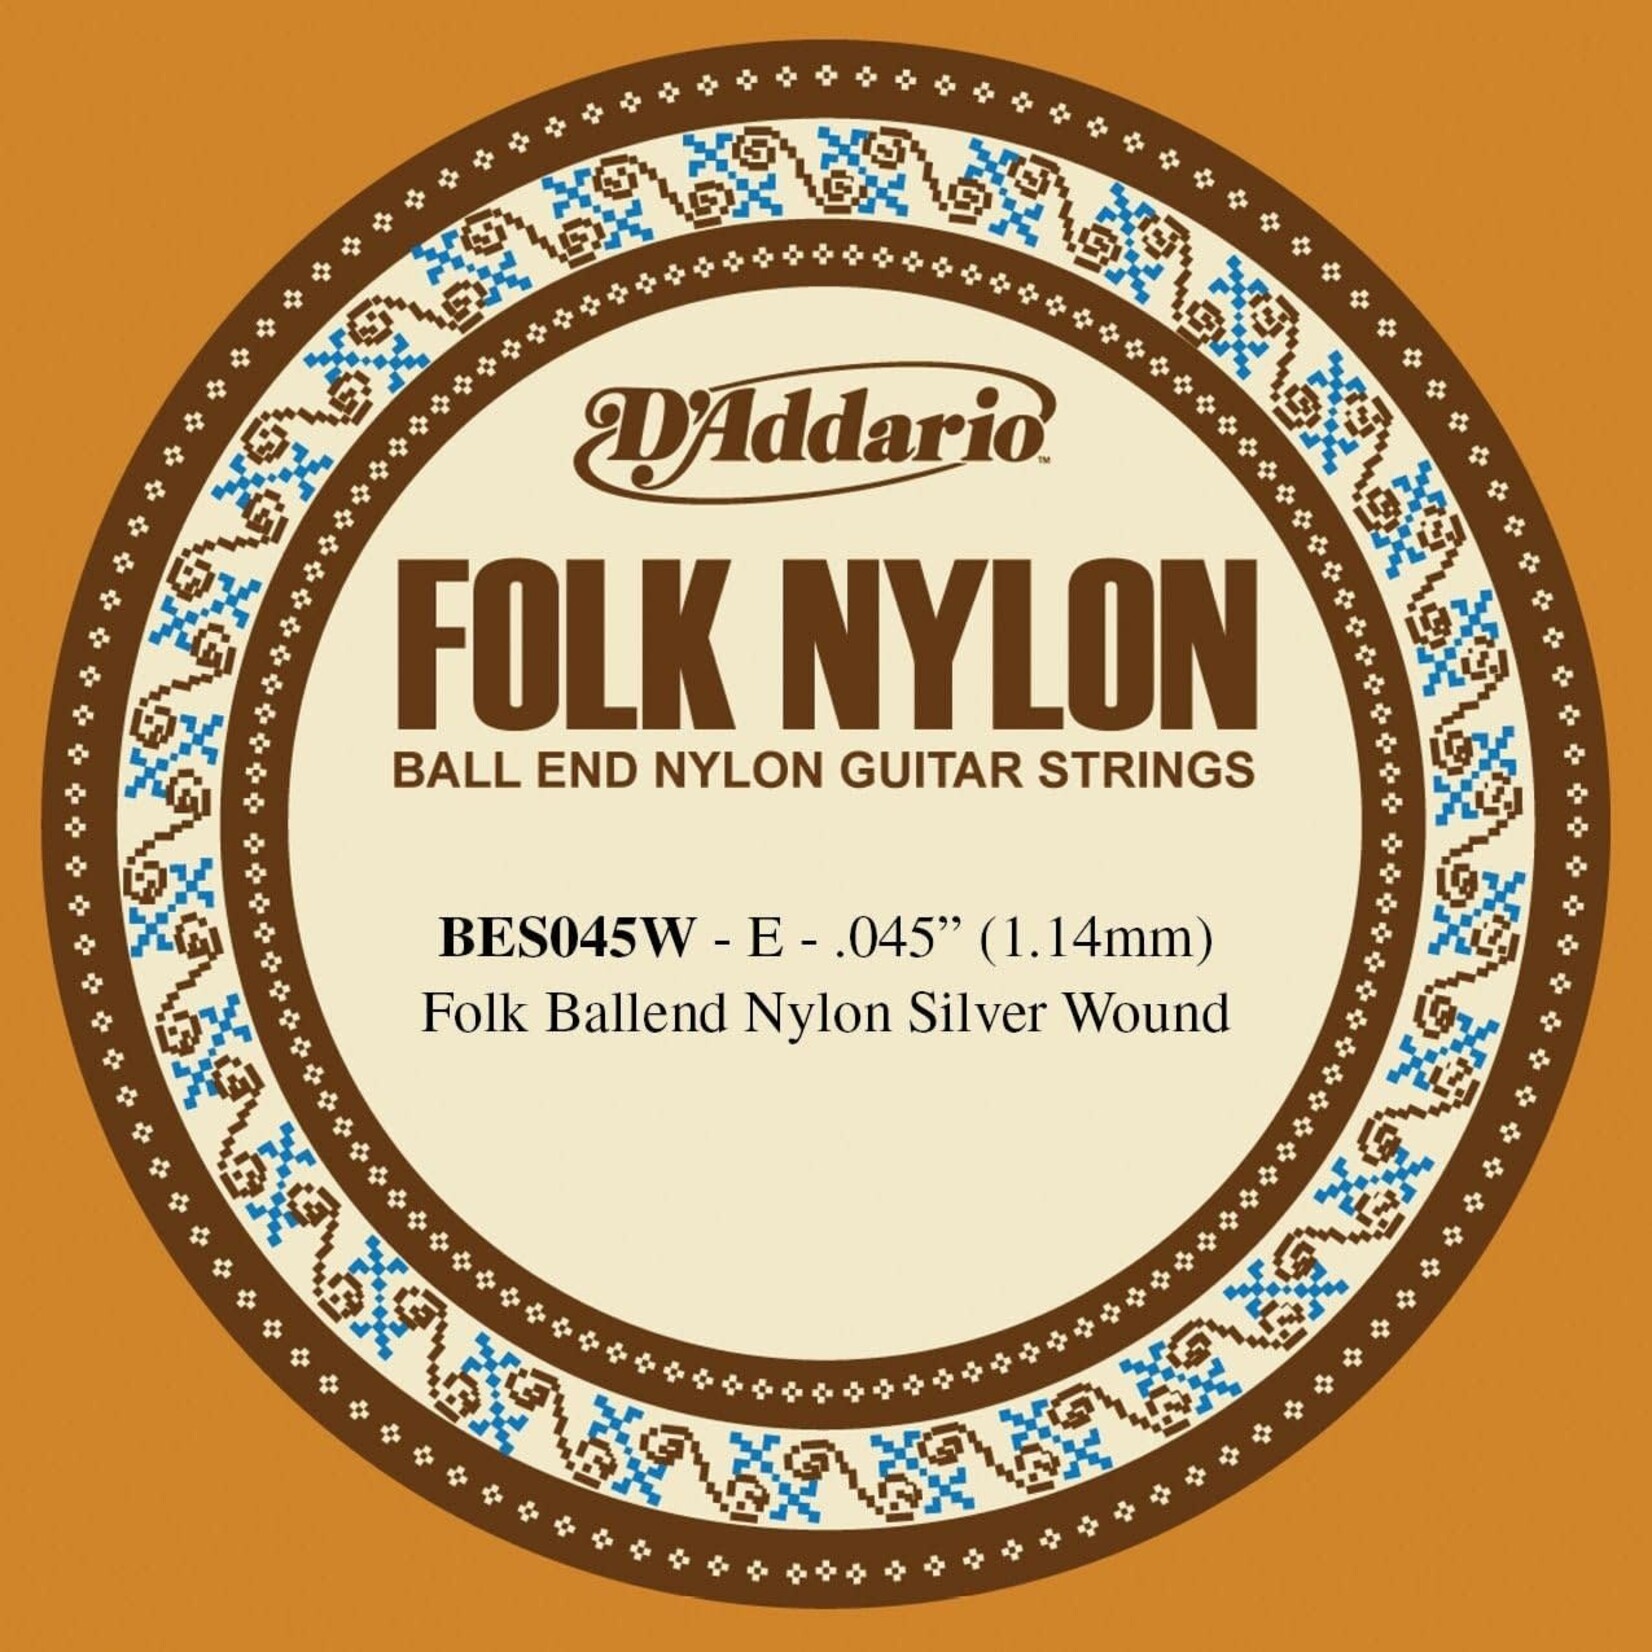 D'Addario D'Addario BES045W Folk Nylon Guitar Single String Silver Wound Ball End .045